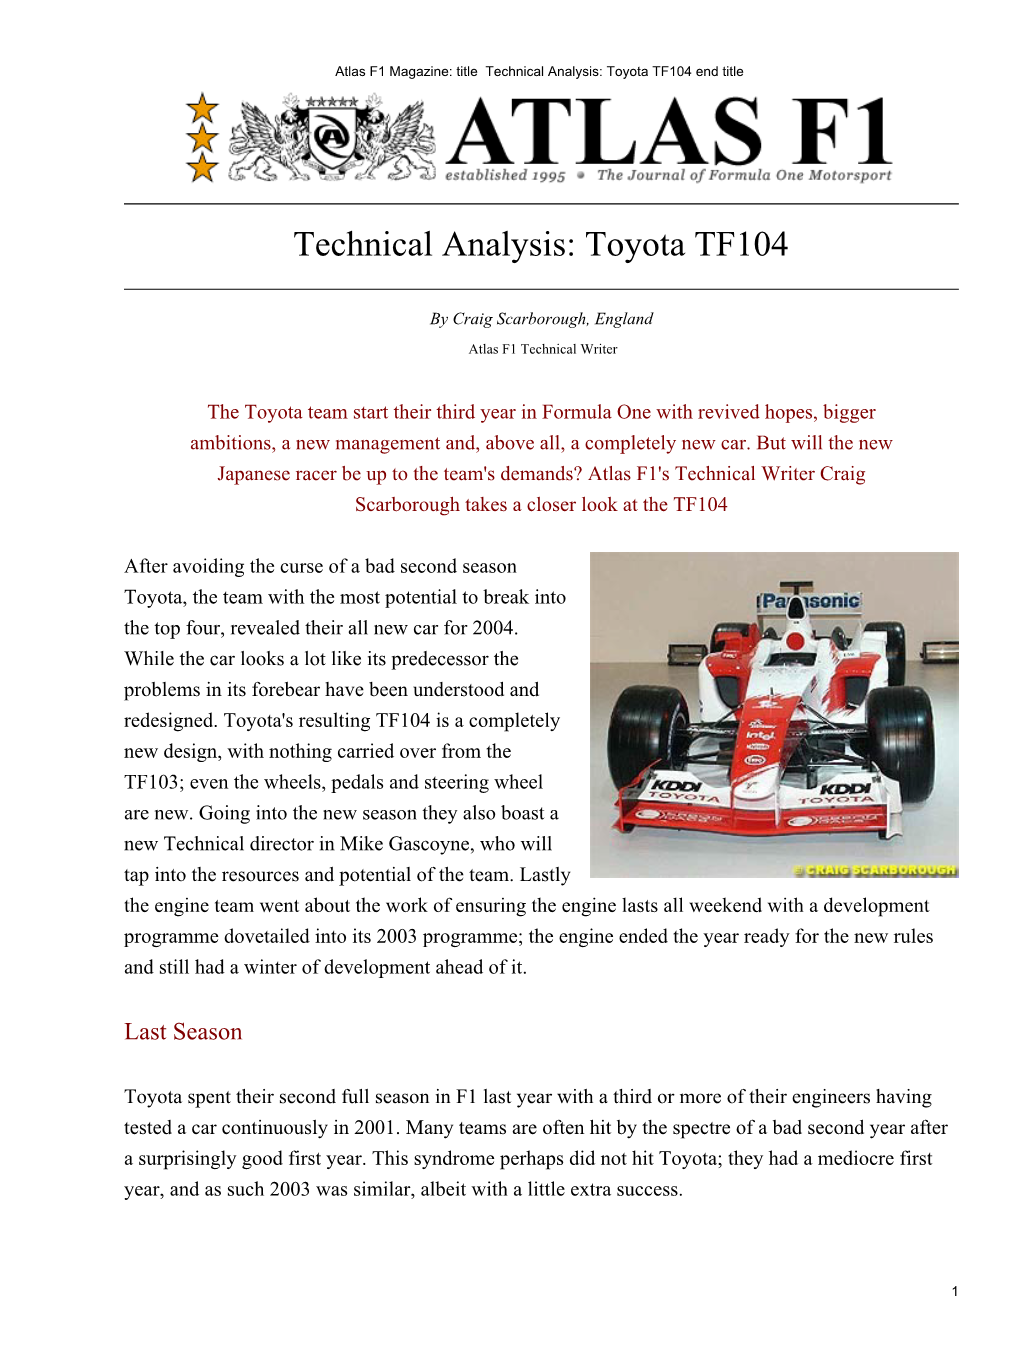 Atlas F1 Magazine: Title Technical Analysis: Toyota TF104 End Title